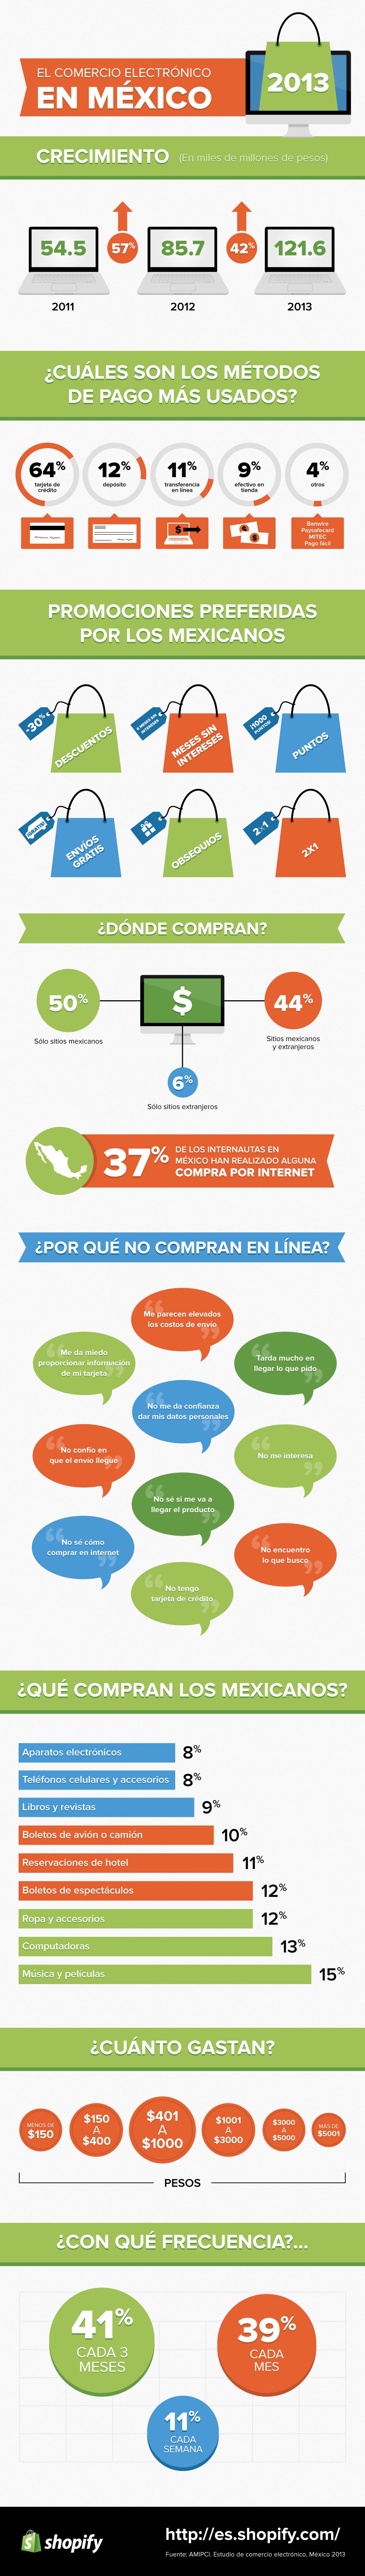 eCommerce en Mexico - Infografia